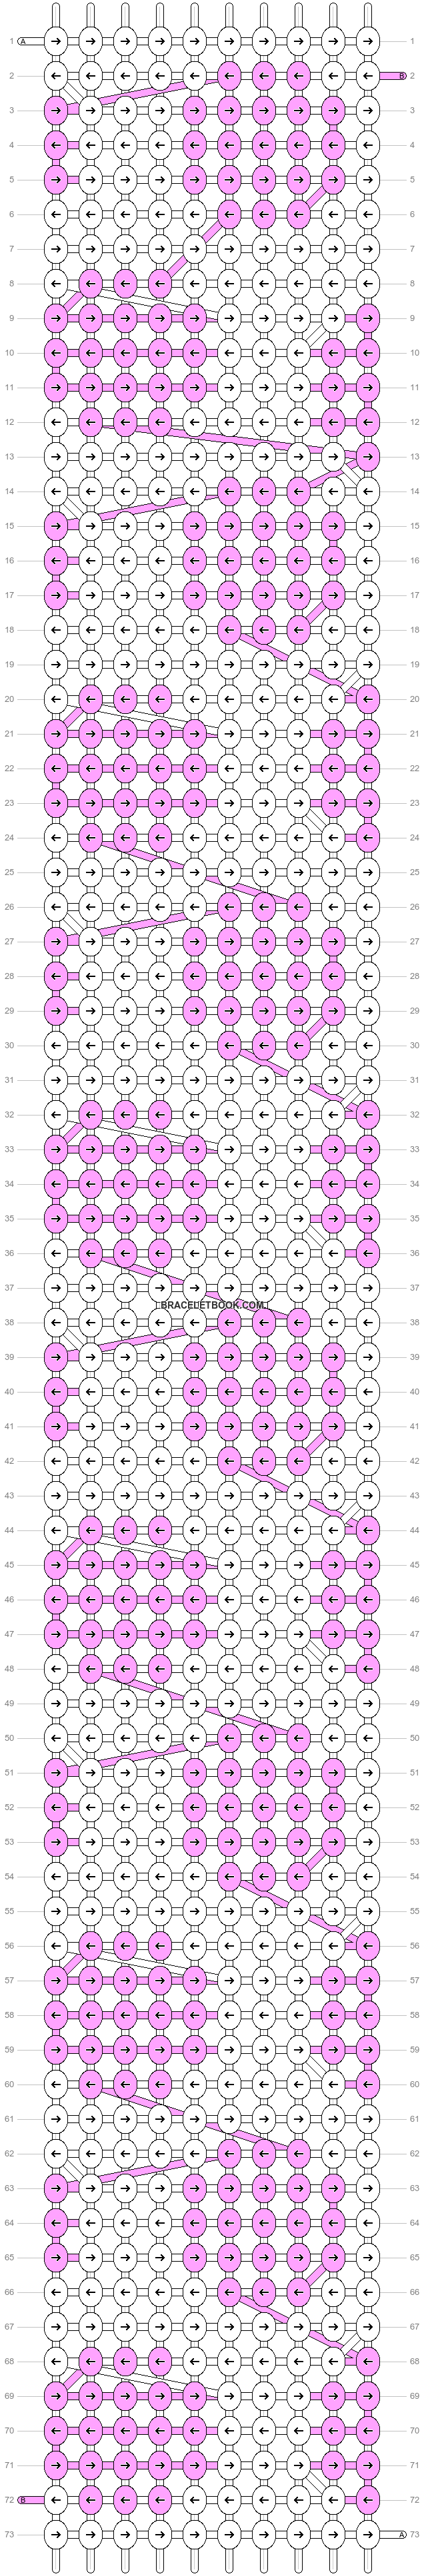 Alpha pattern #52560 variation #85594 pattern